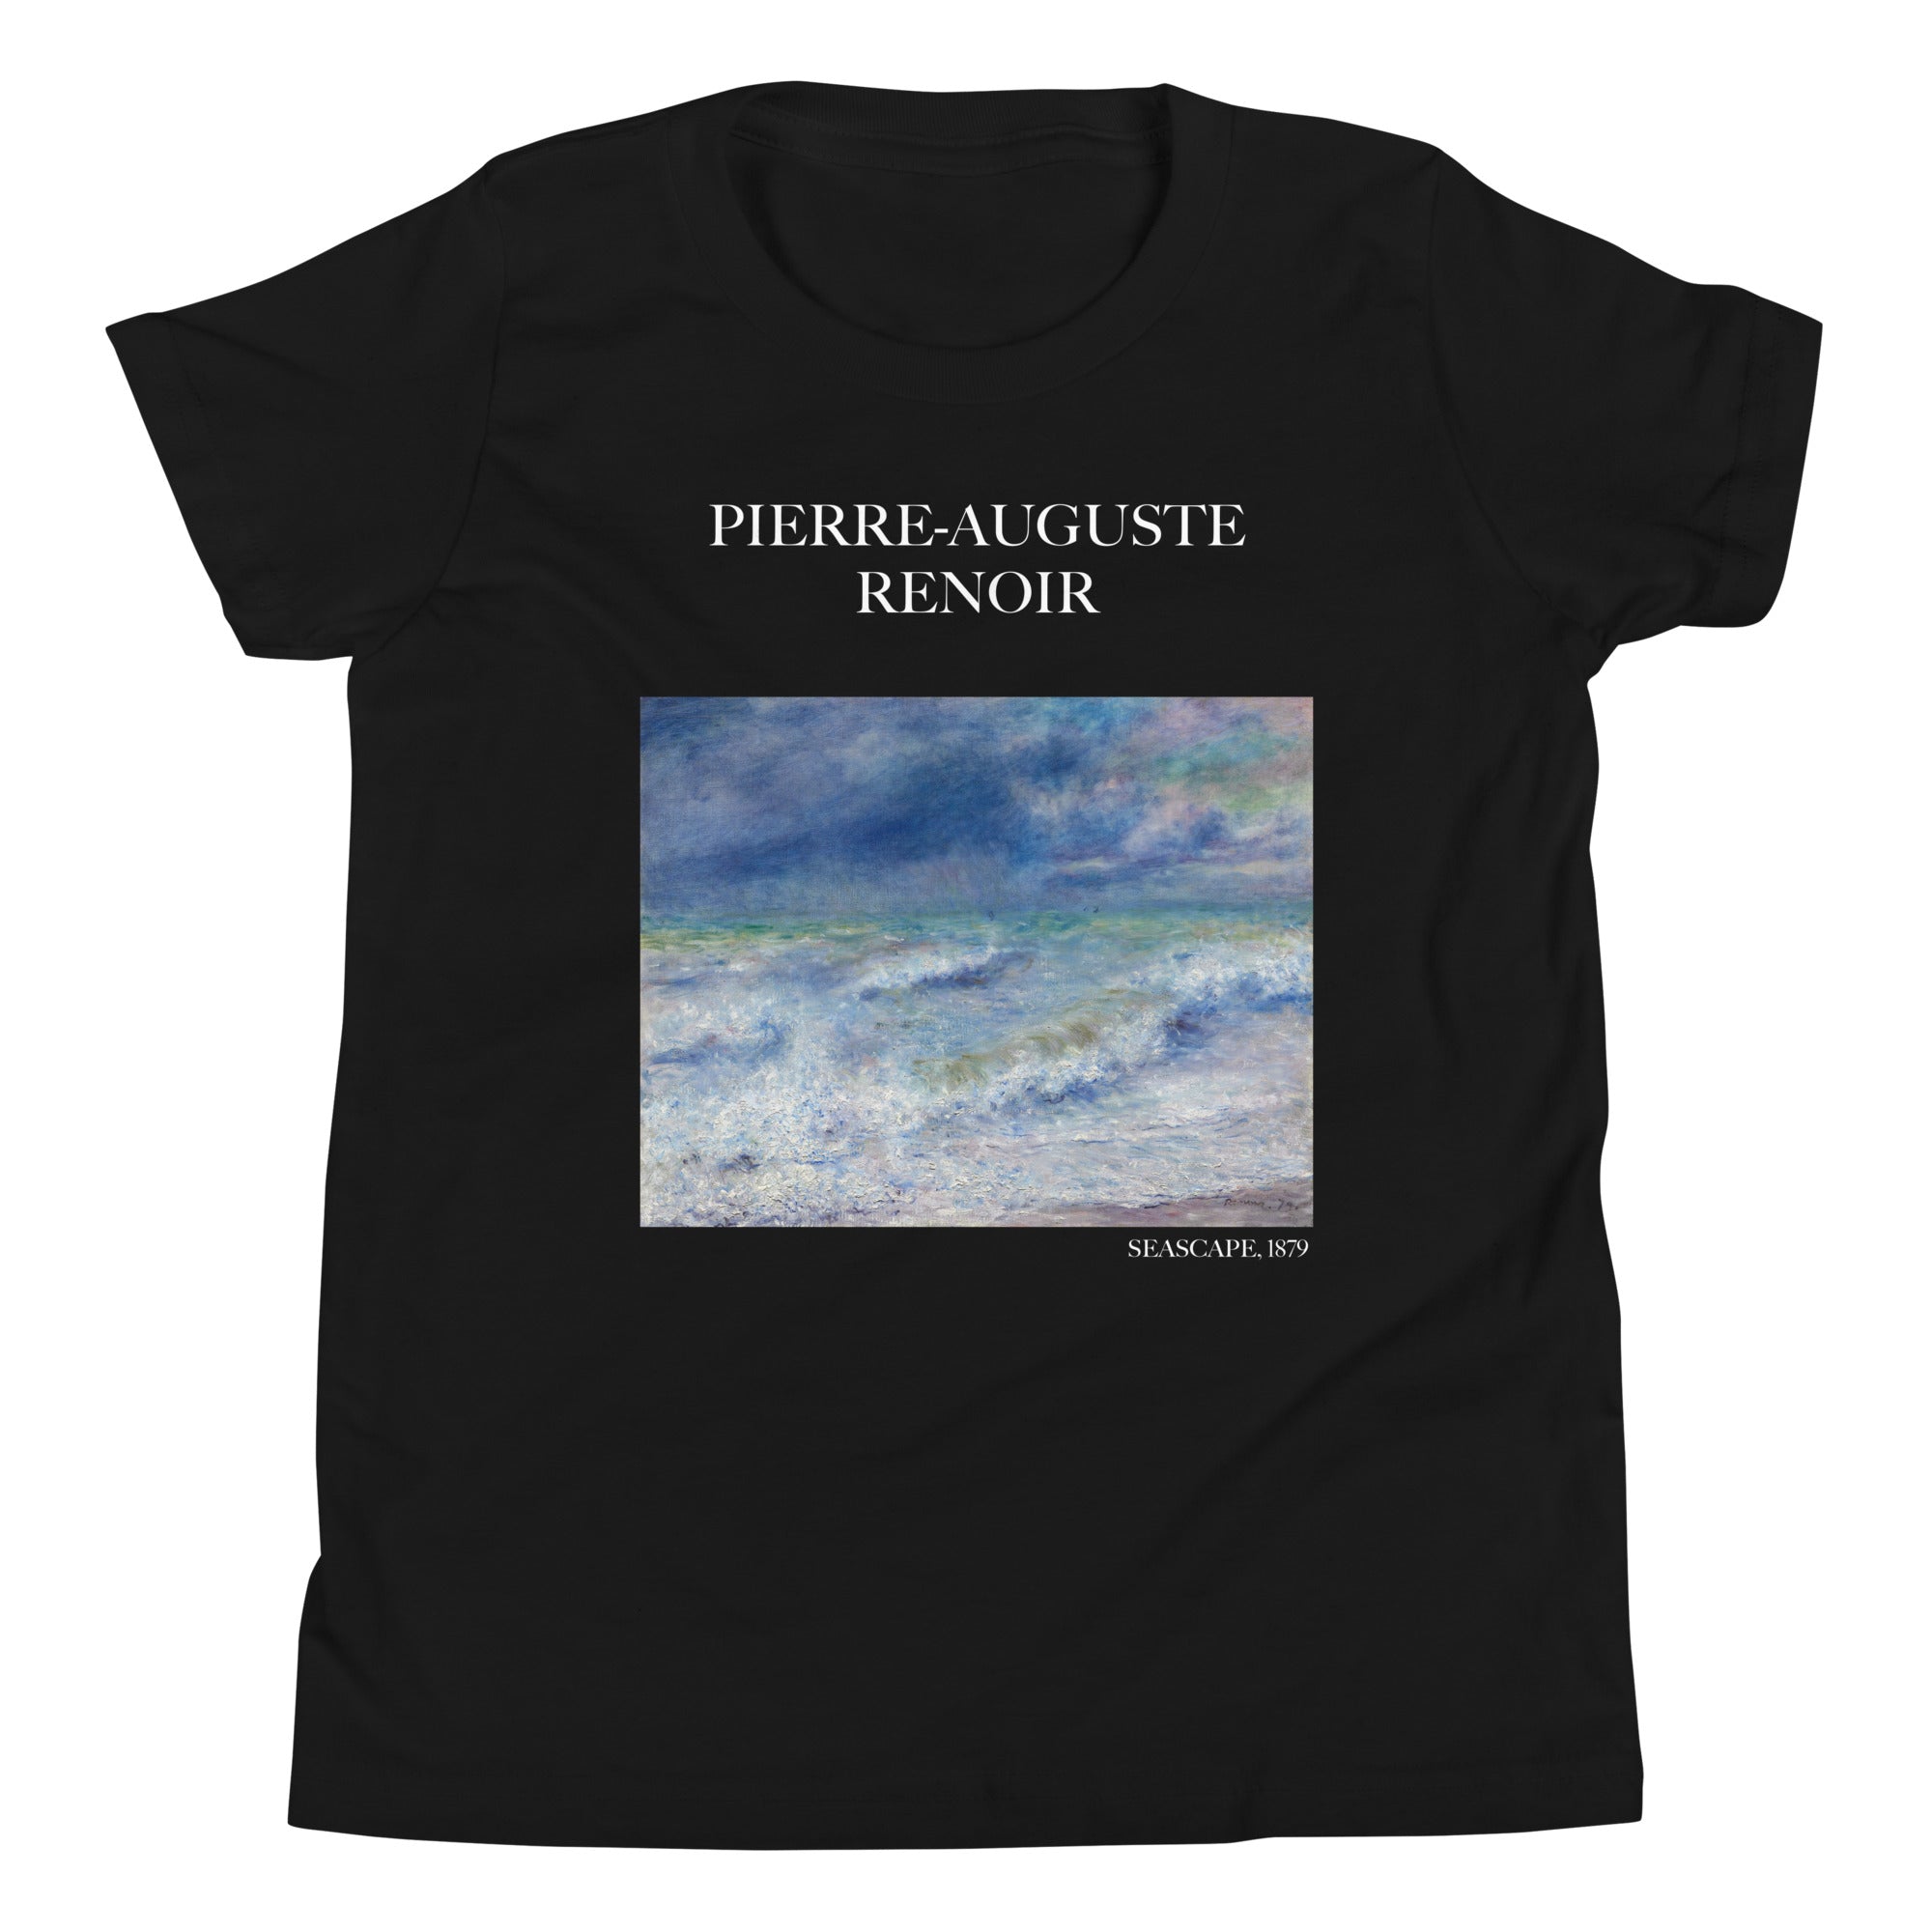 Pierre-Auguste Renoir 'Seascape' Famous Painting Short Sleeve T-Shirt | Premium Youth Art Tee